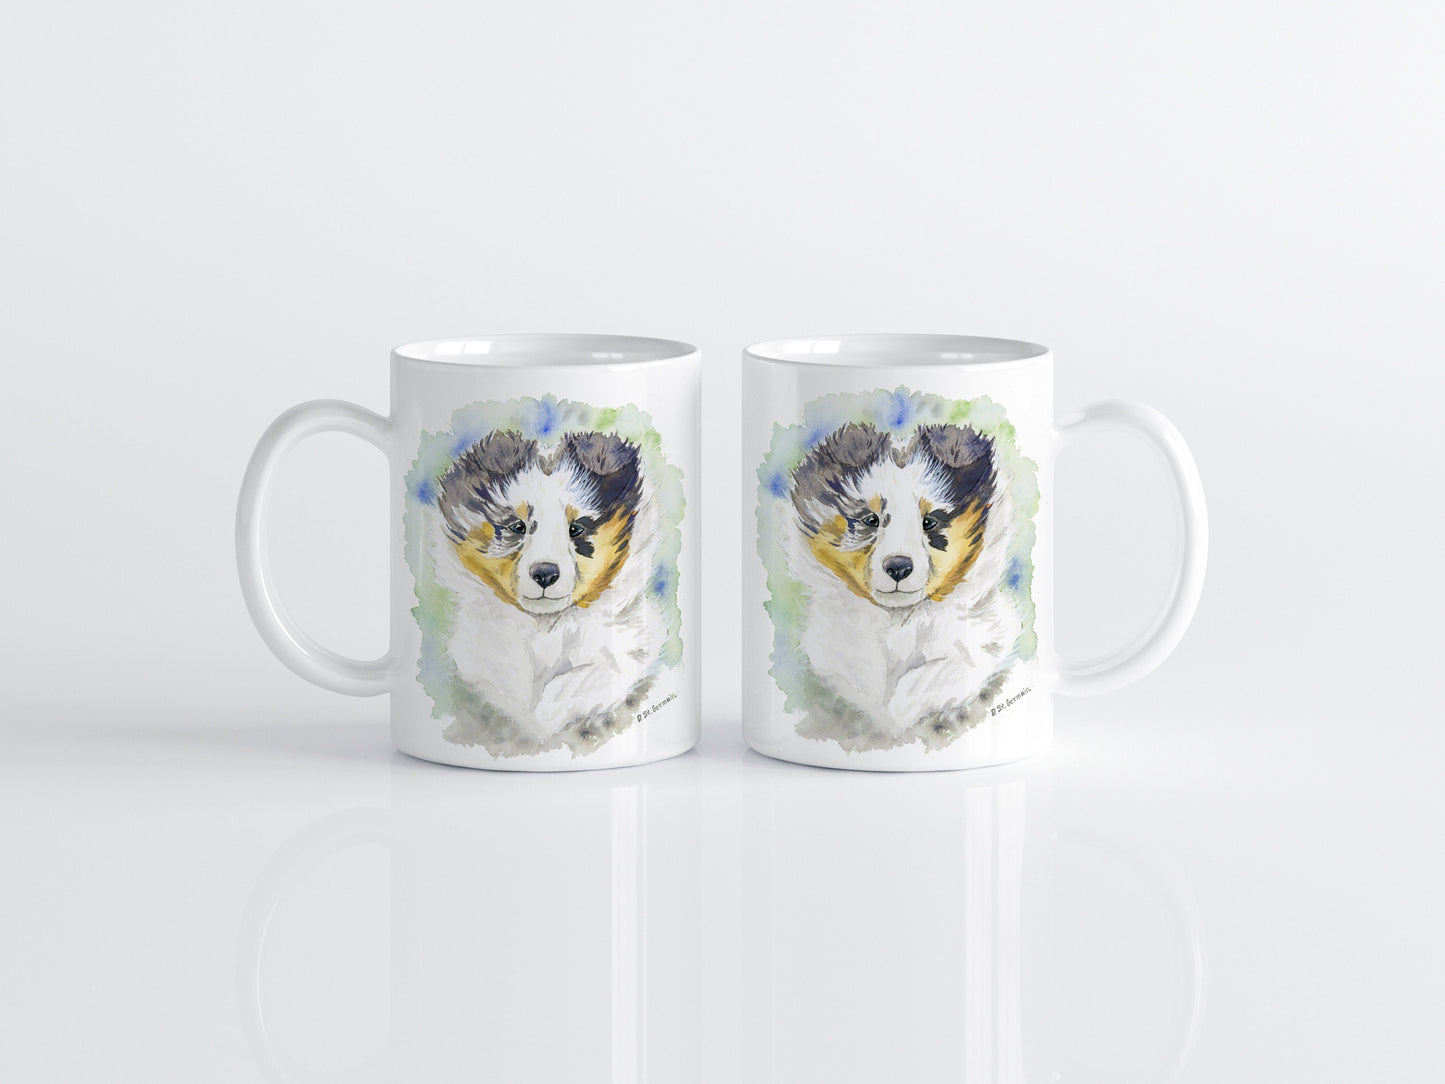 Blue Merle Sheltie Mug, Shetland Sheepdog, Personalized, Sheltie Holiday Gift, Sheltie Gift, Sheltie Present, Custom Dog Mug, Dog Lover Gift